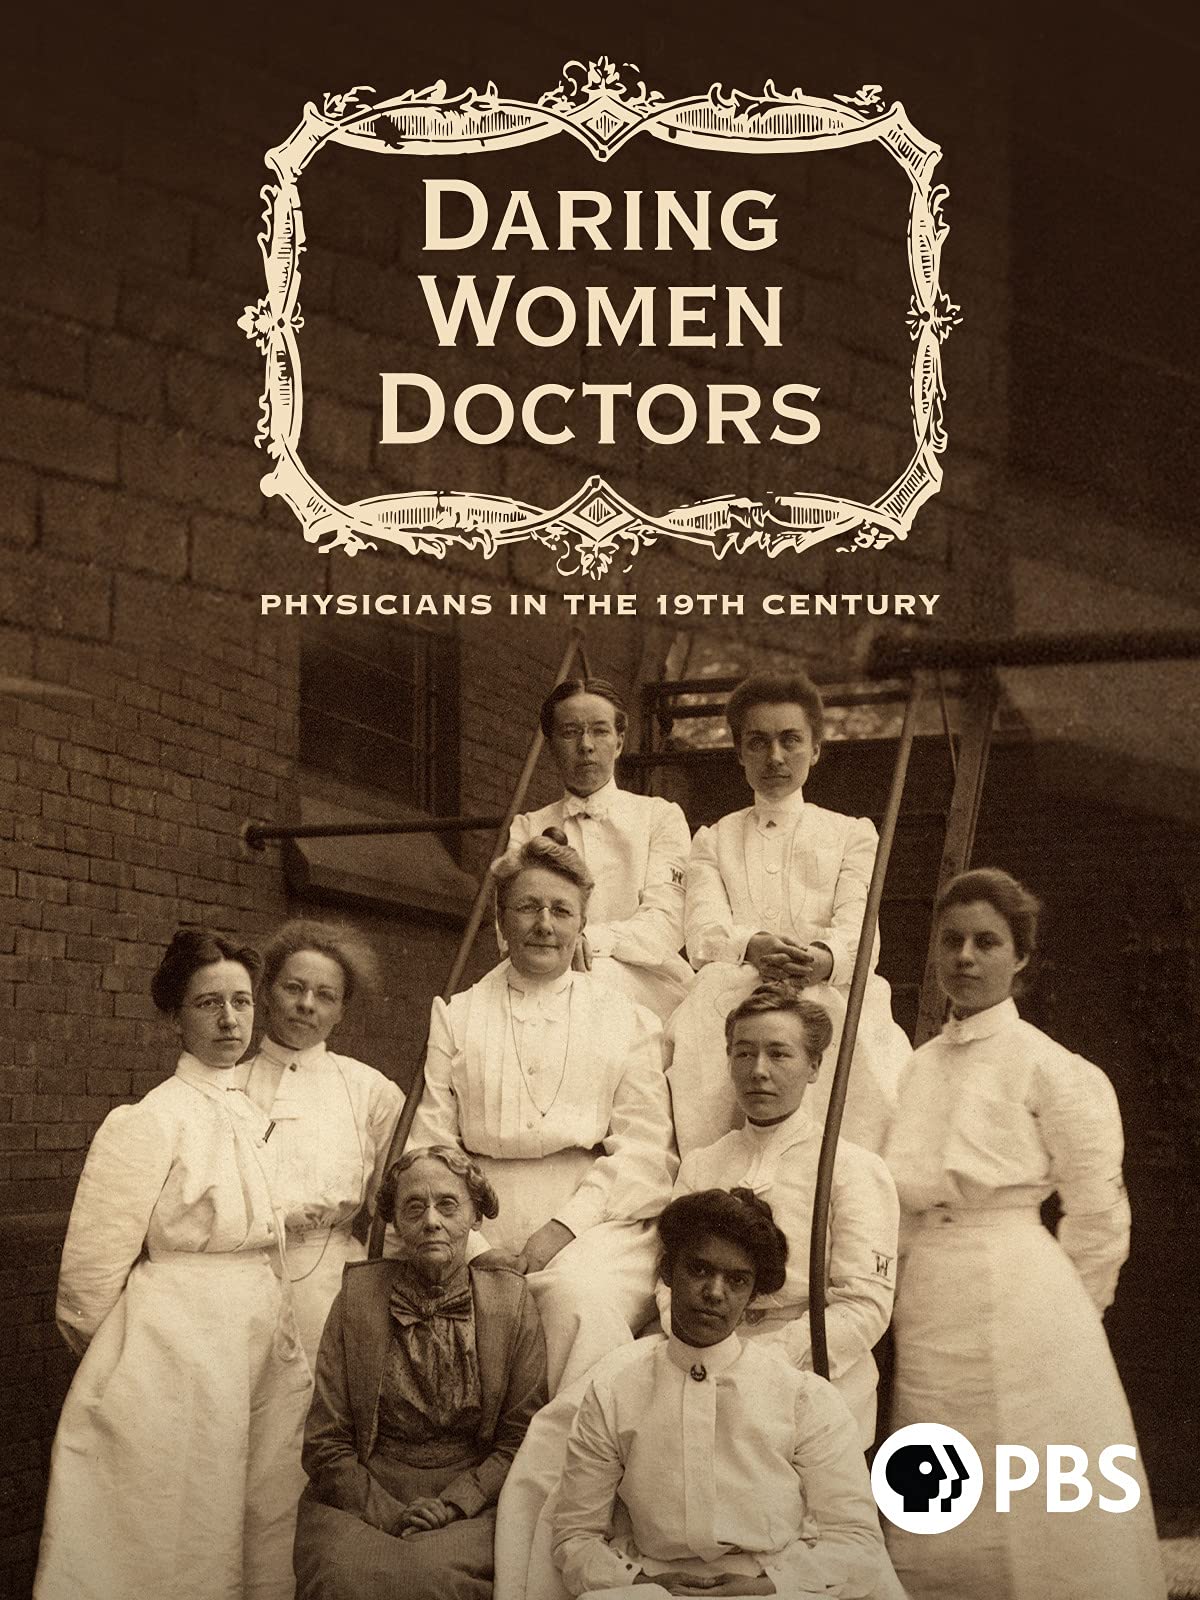 Breaking Barriers: Daring Women Doctors in the 19th Century